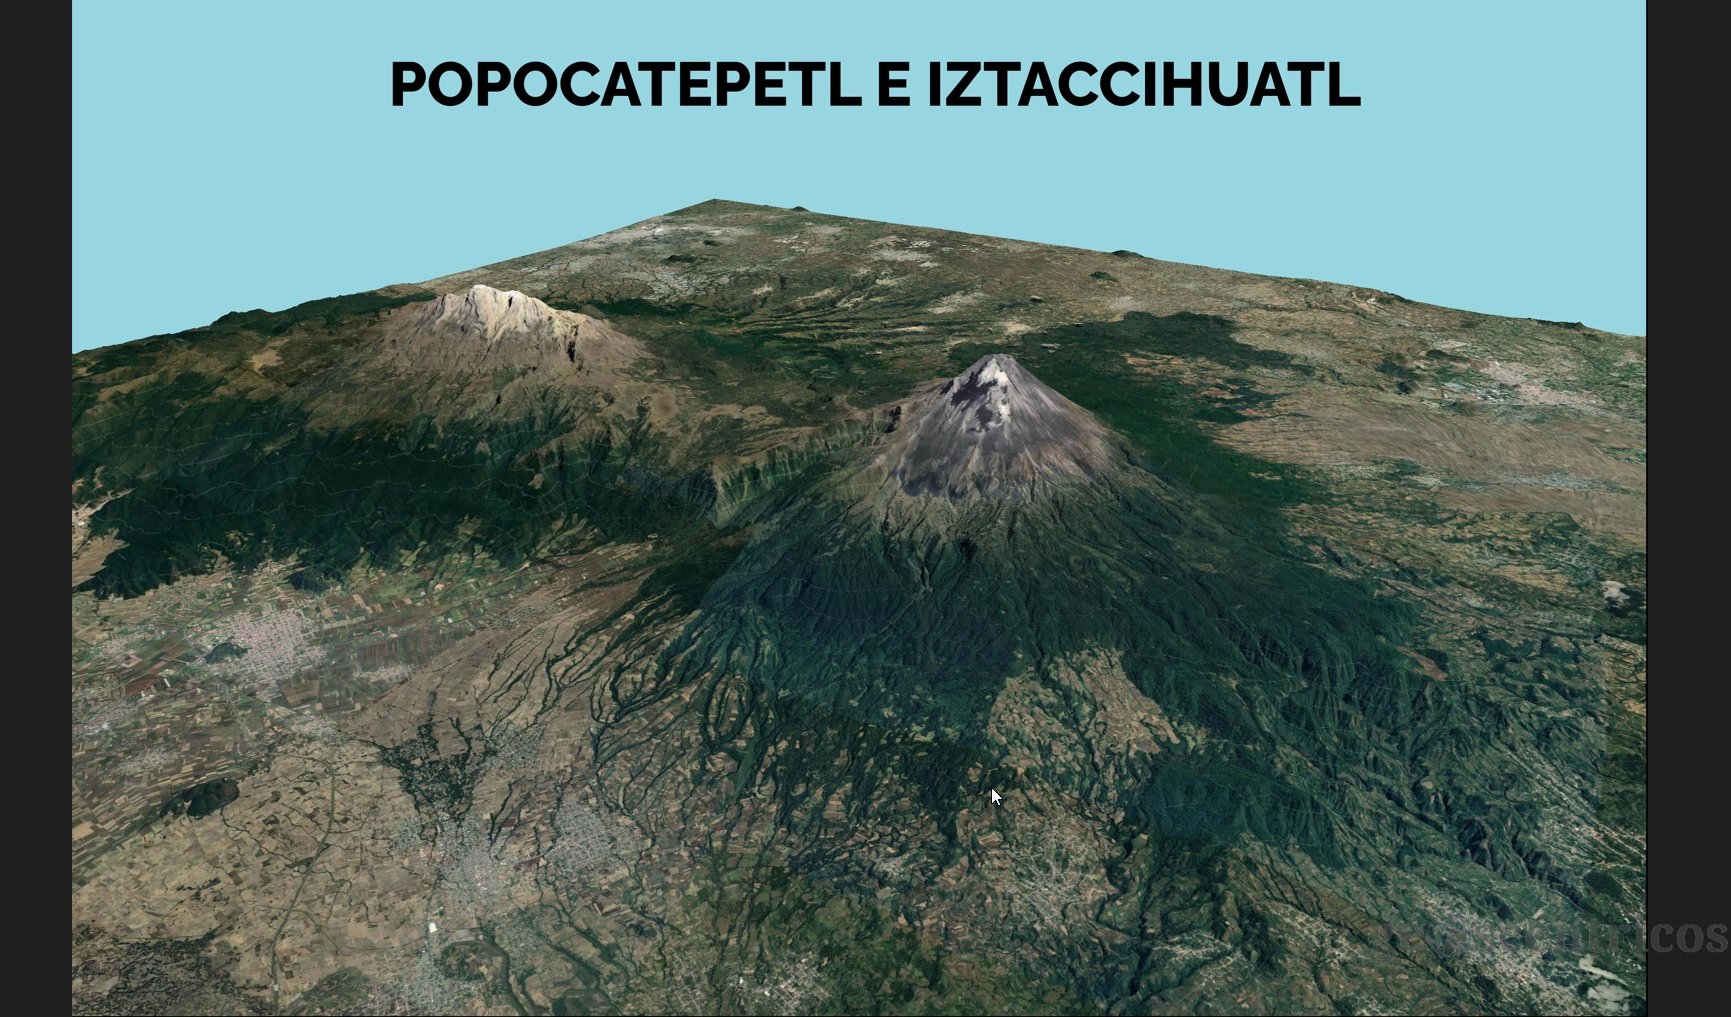 Visualización en 3D del Popocatepetl e Iztaccíhuatl